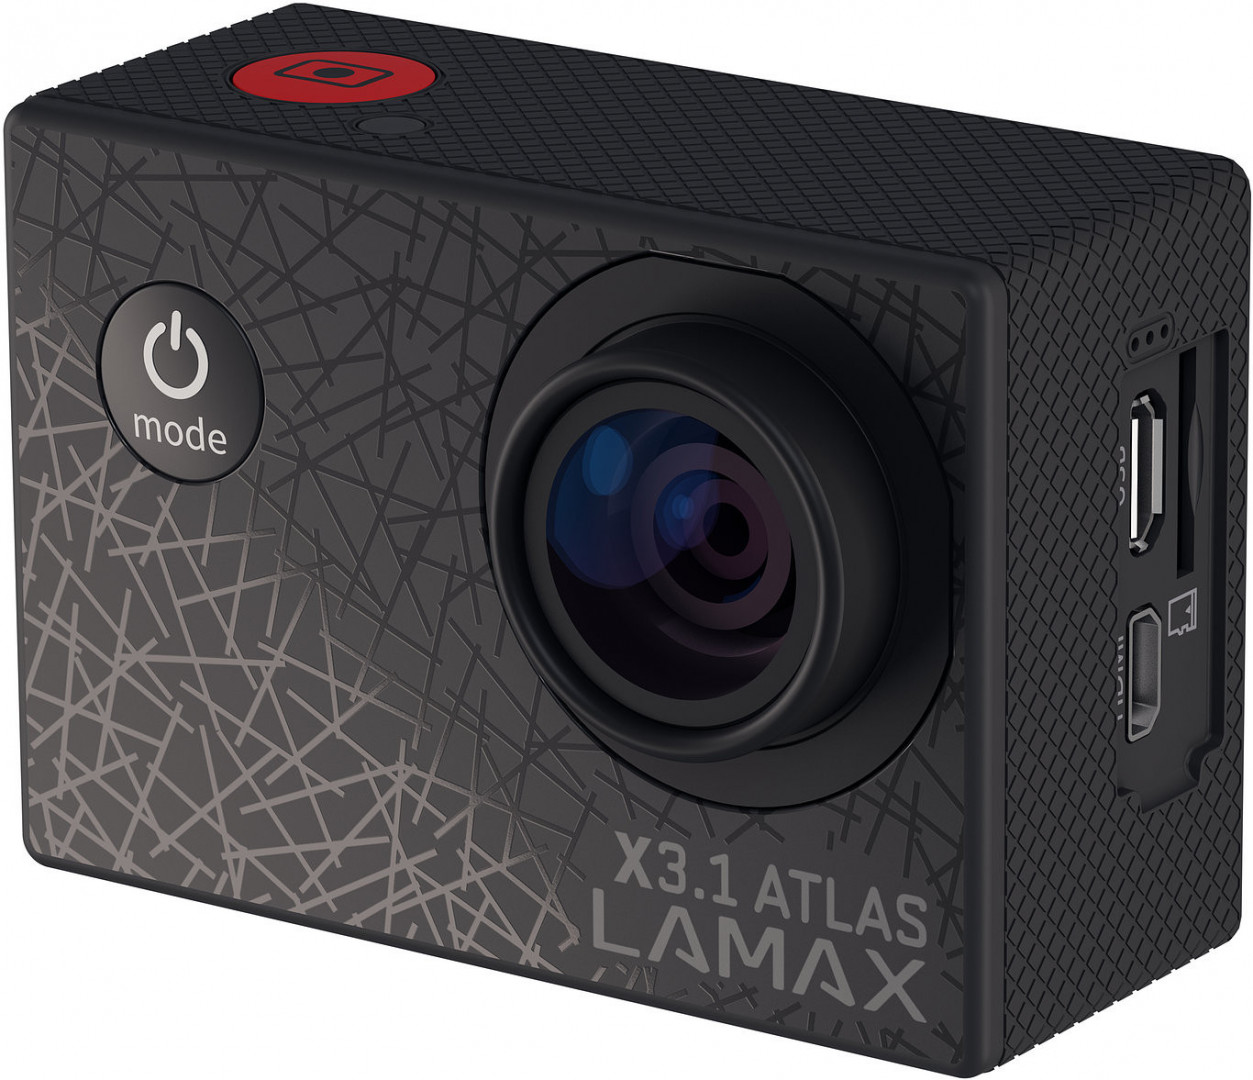 Akčná kamera Lamax X3.1 Atlas